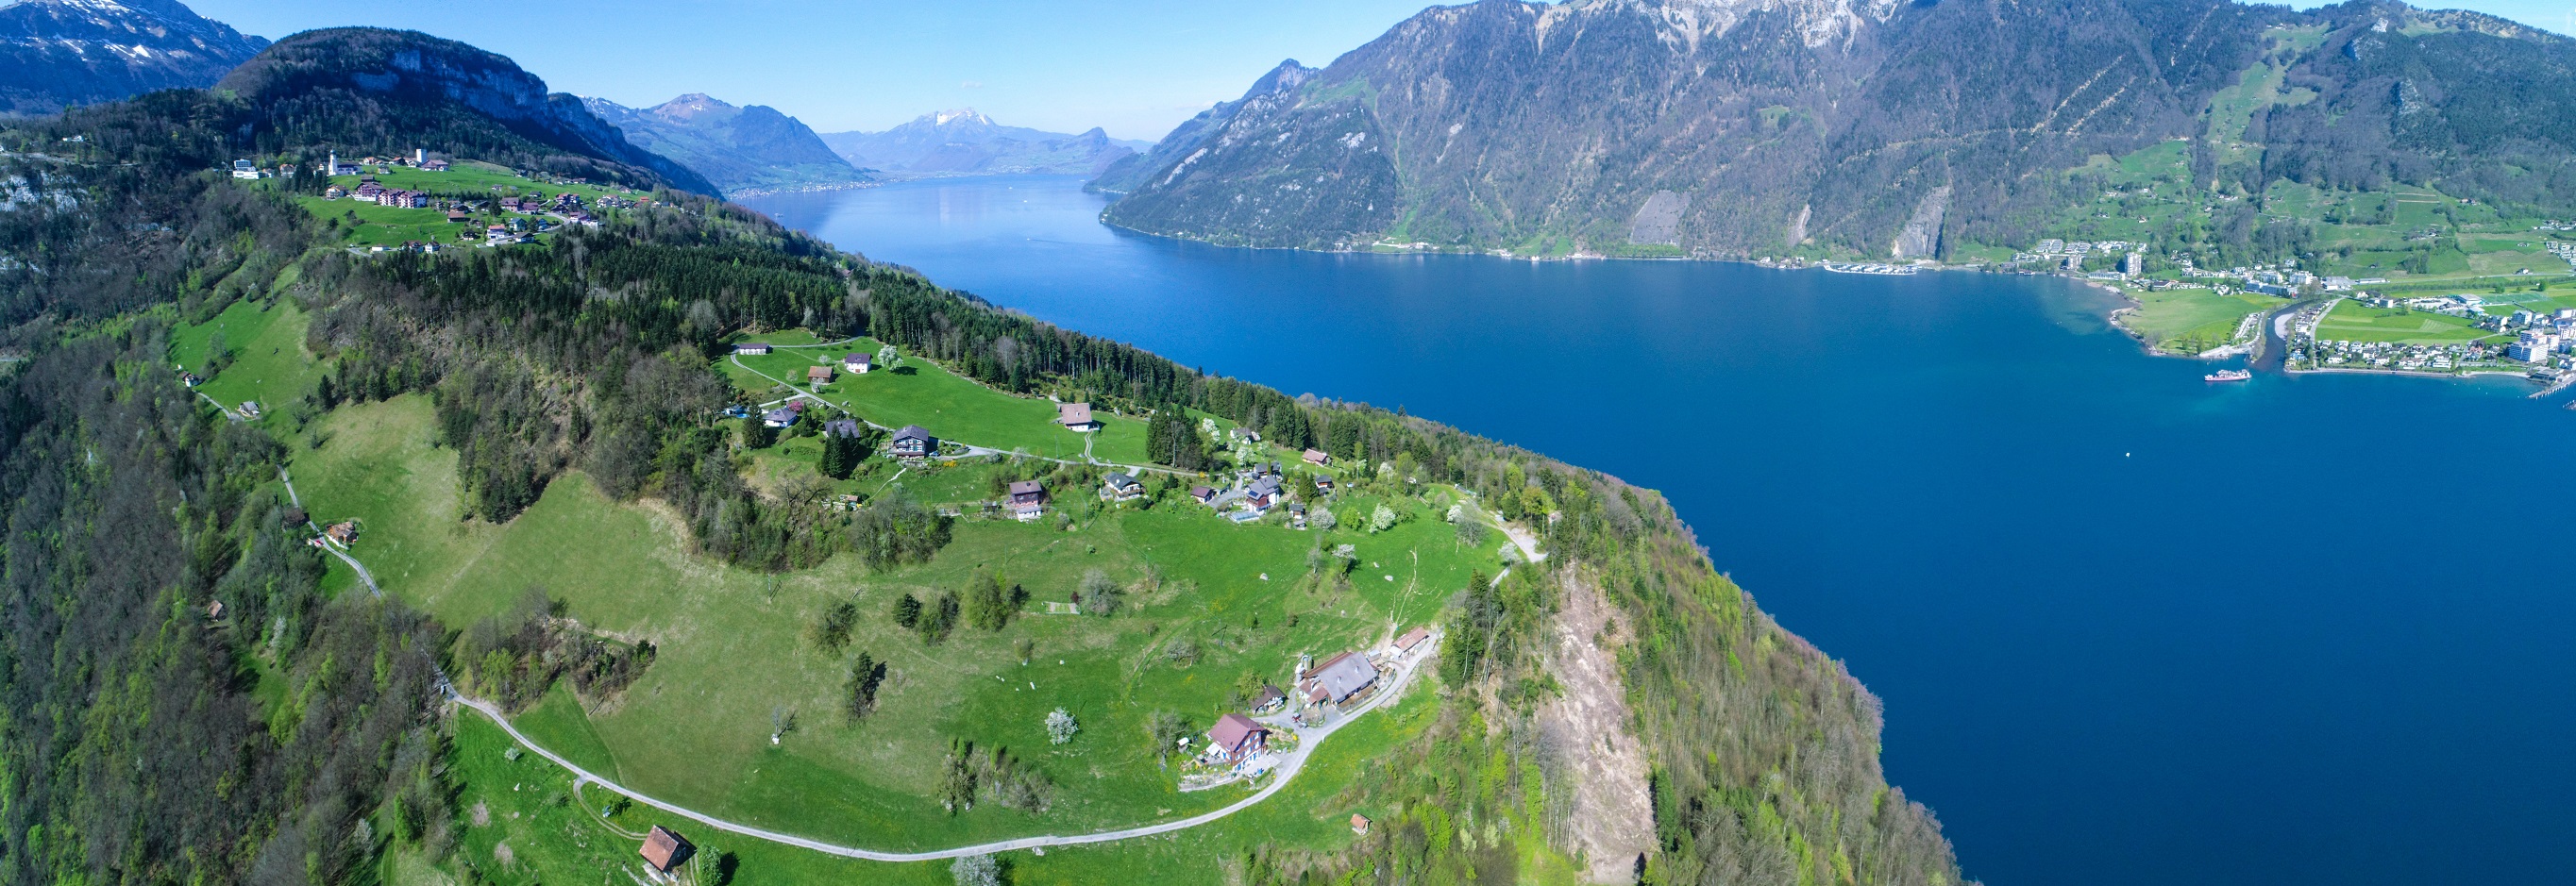 Switzerland Lake Lucern educational school trip